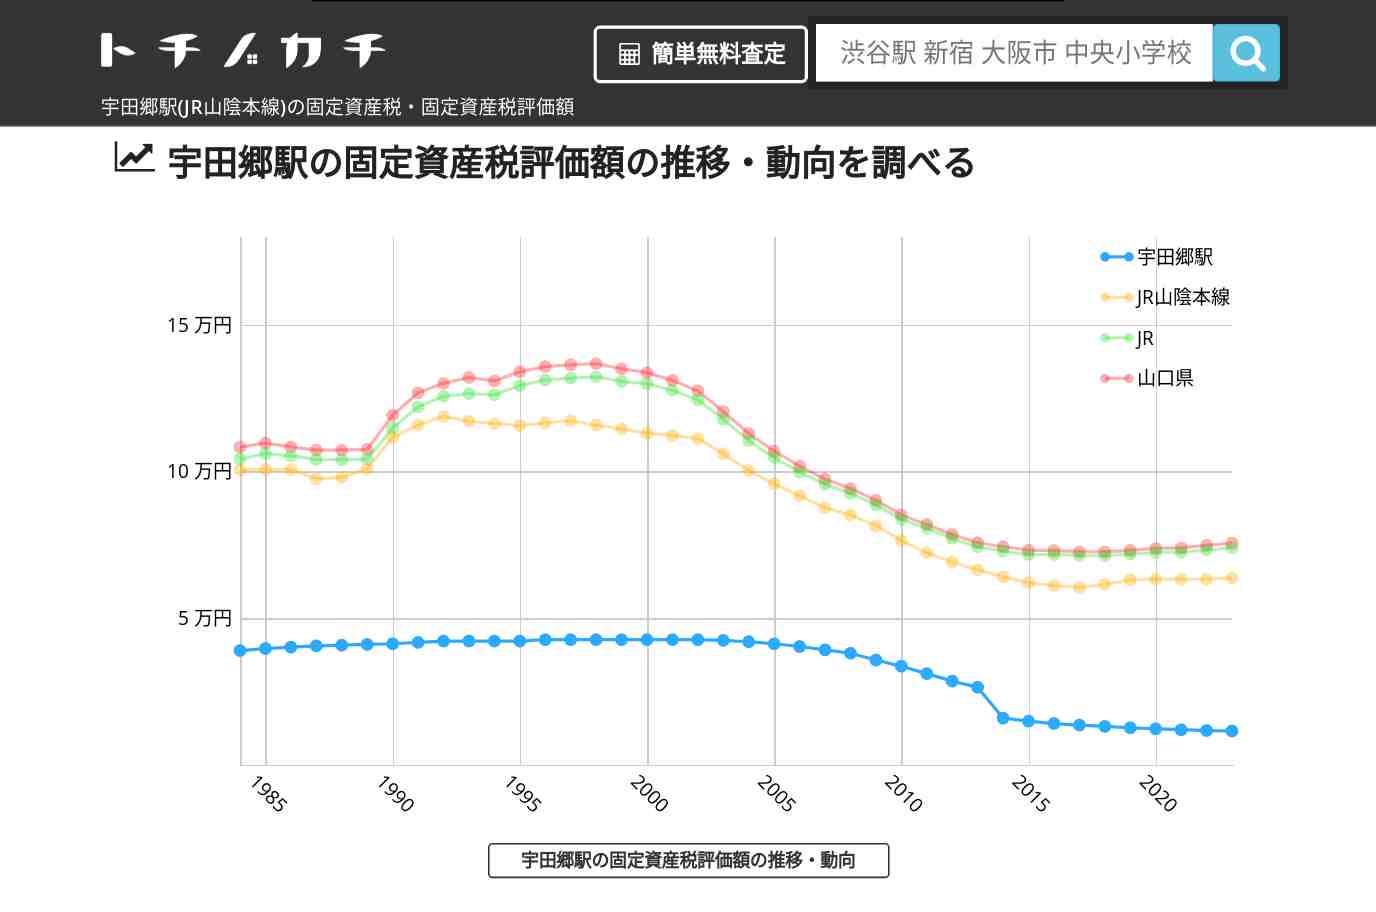 宇田郷駅(JR山陰本線)の固定資産税・固定資産税評価額 | トチノカチ